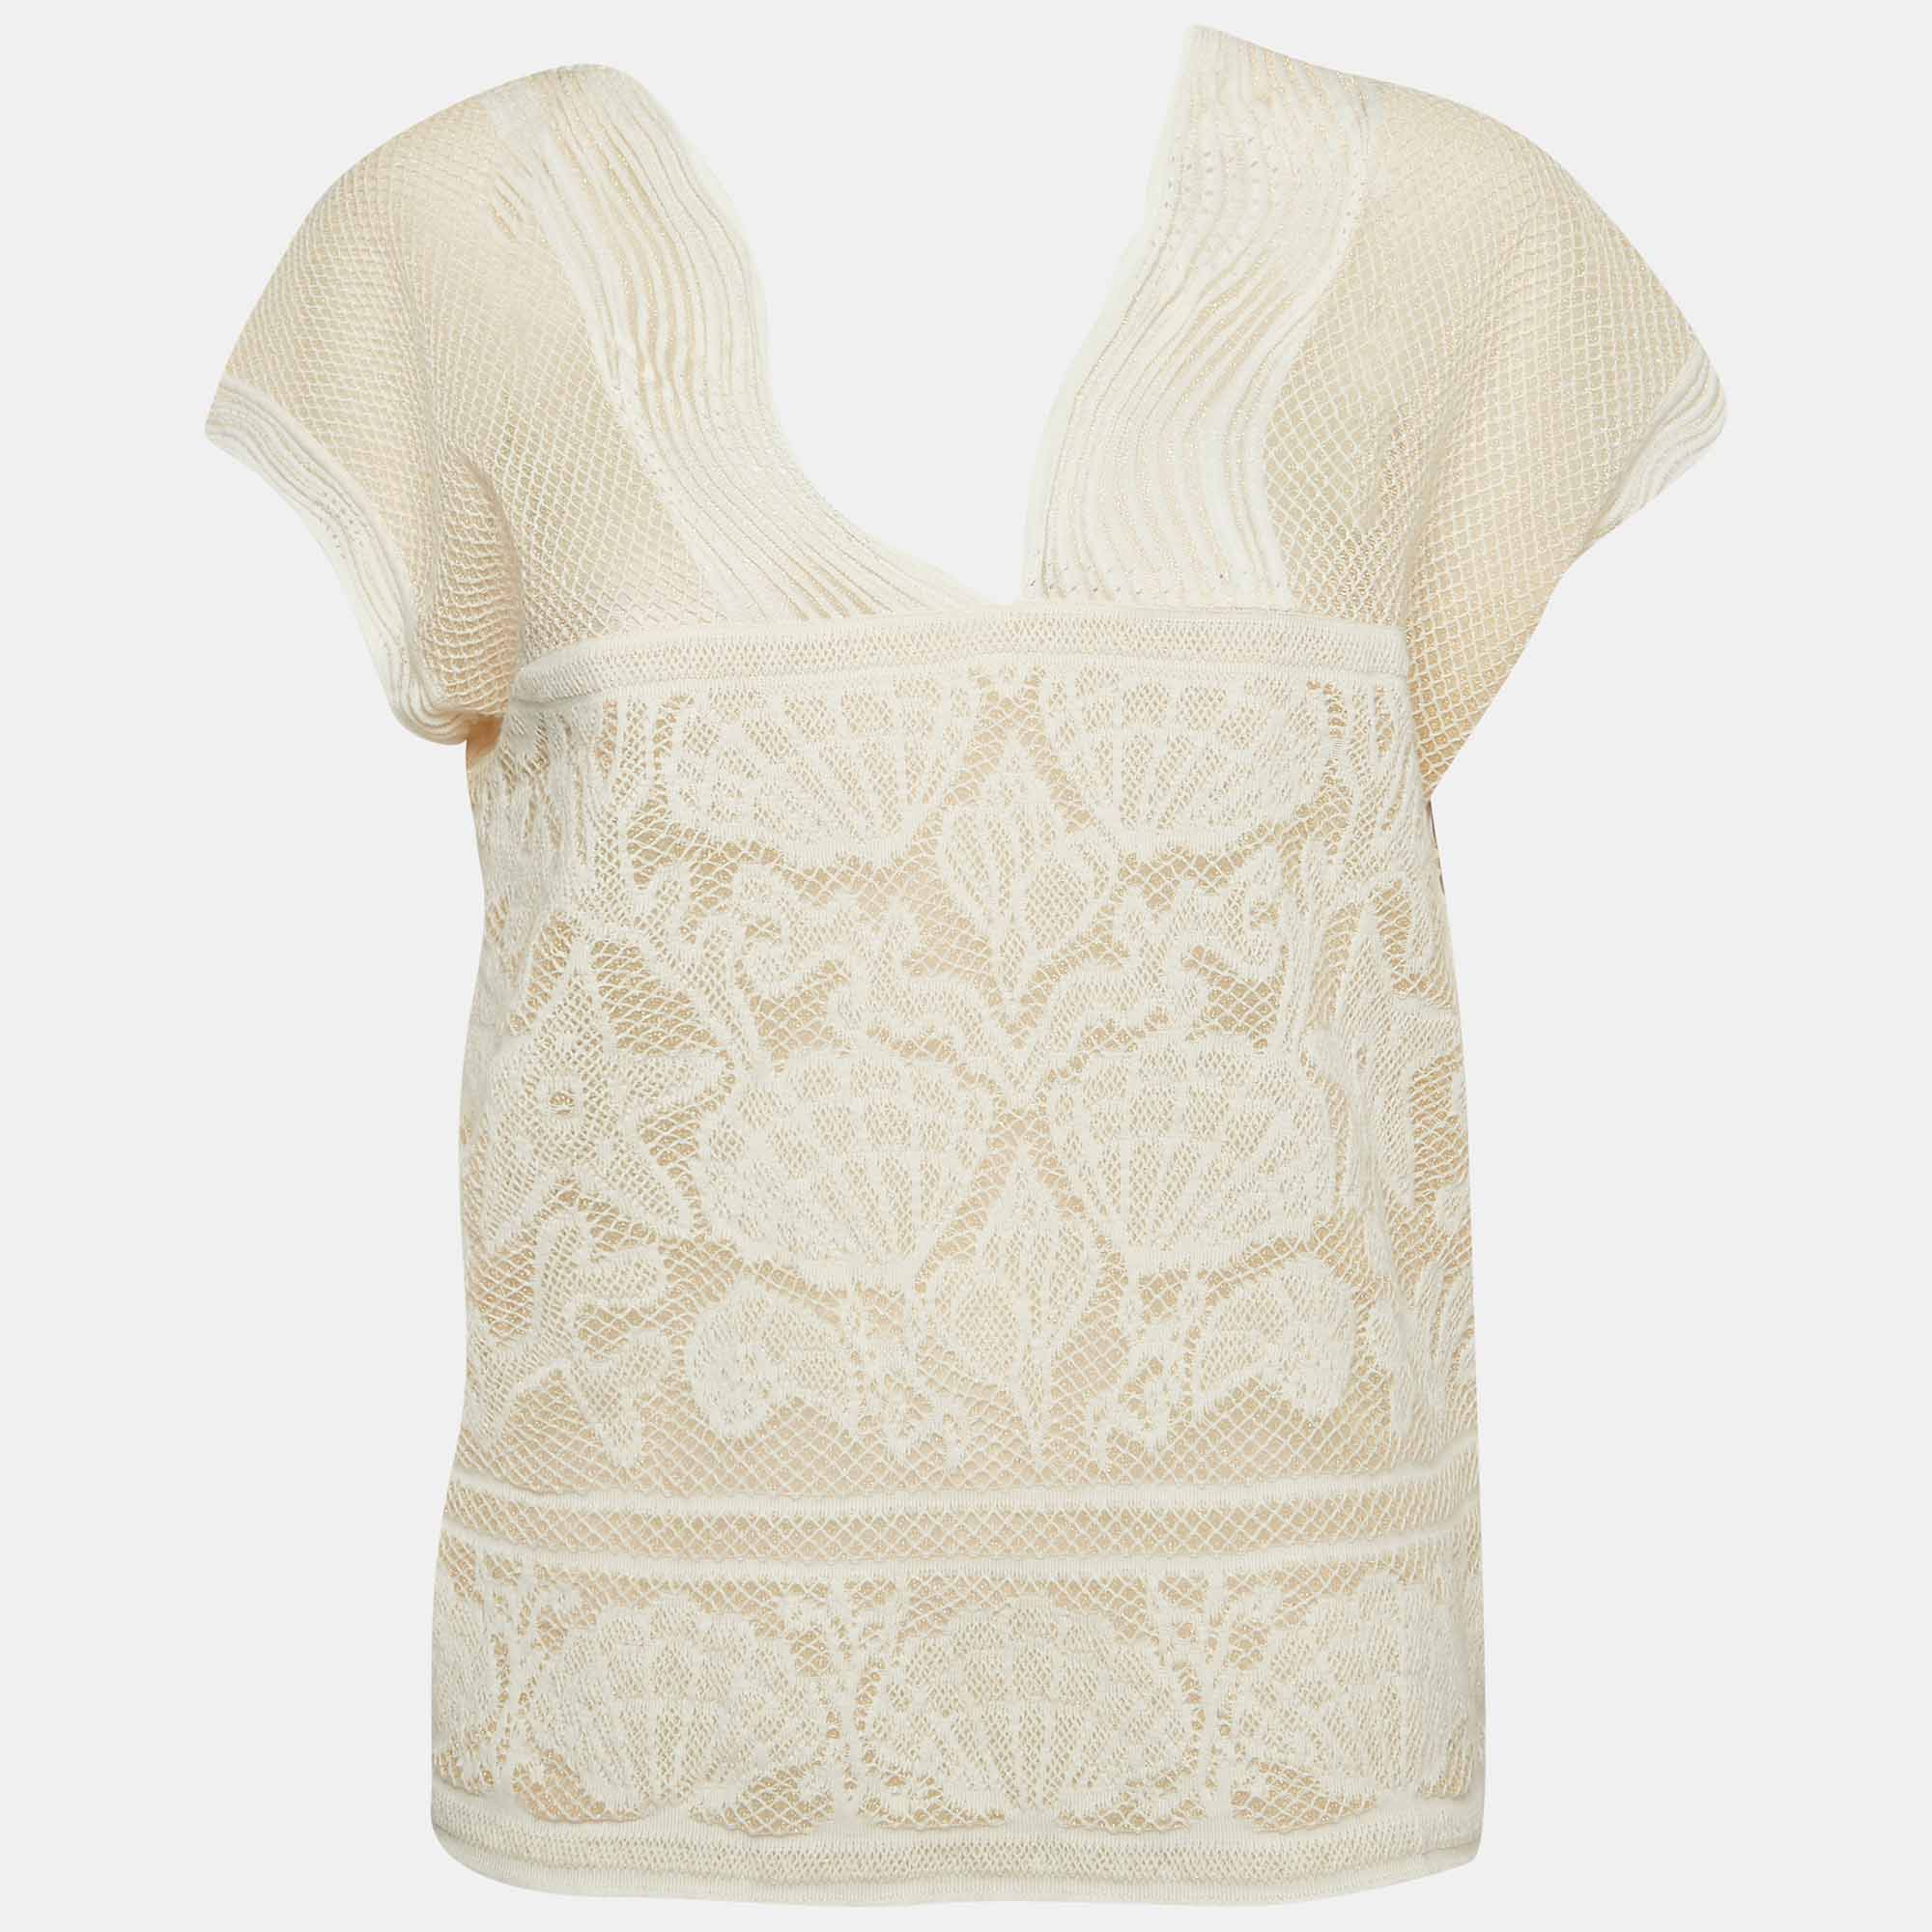 M missoni ivory white sea shell pattern lurex knit cap sleeve top s